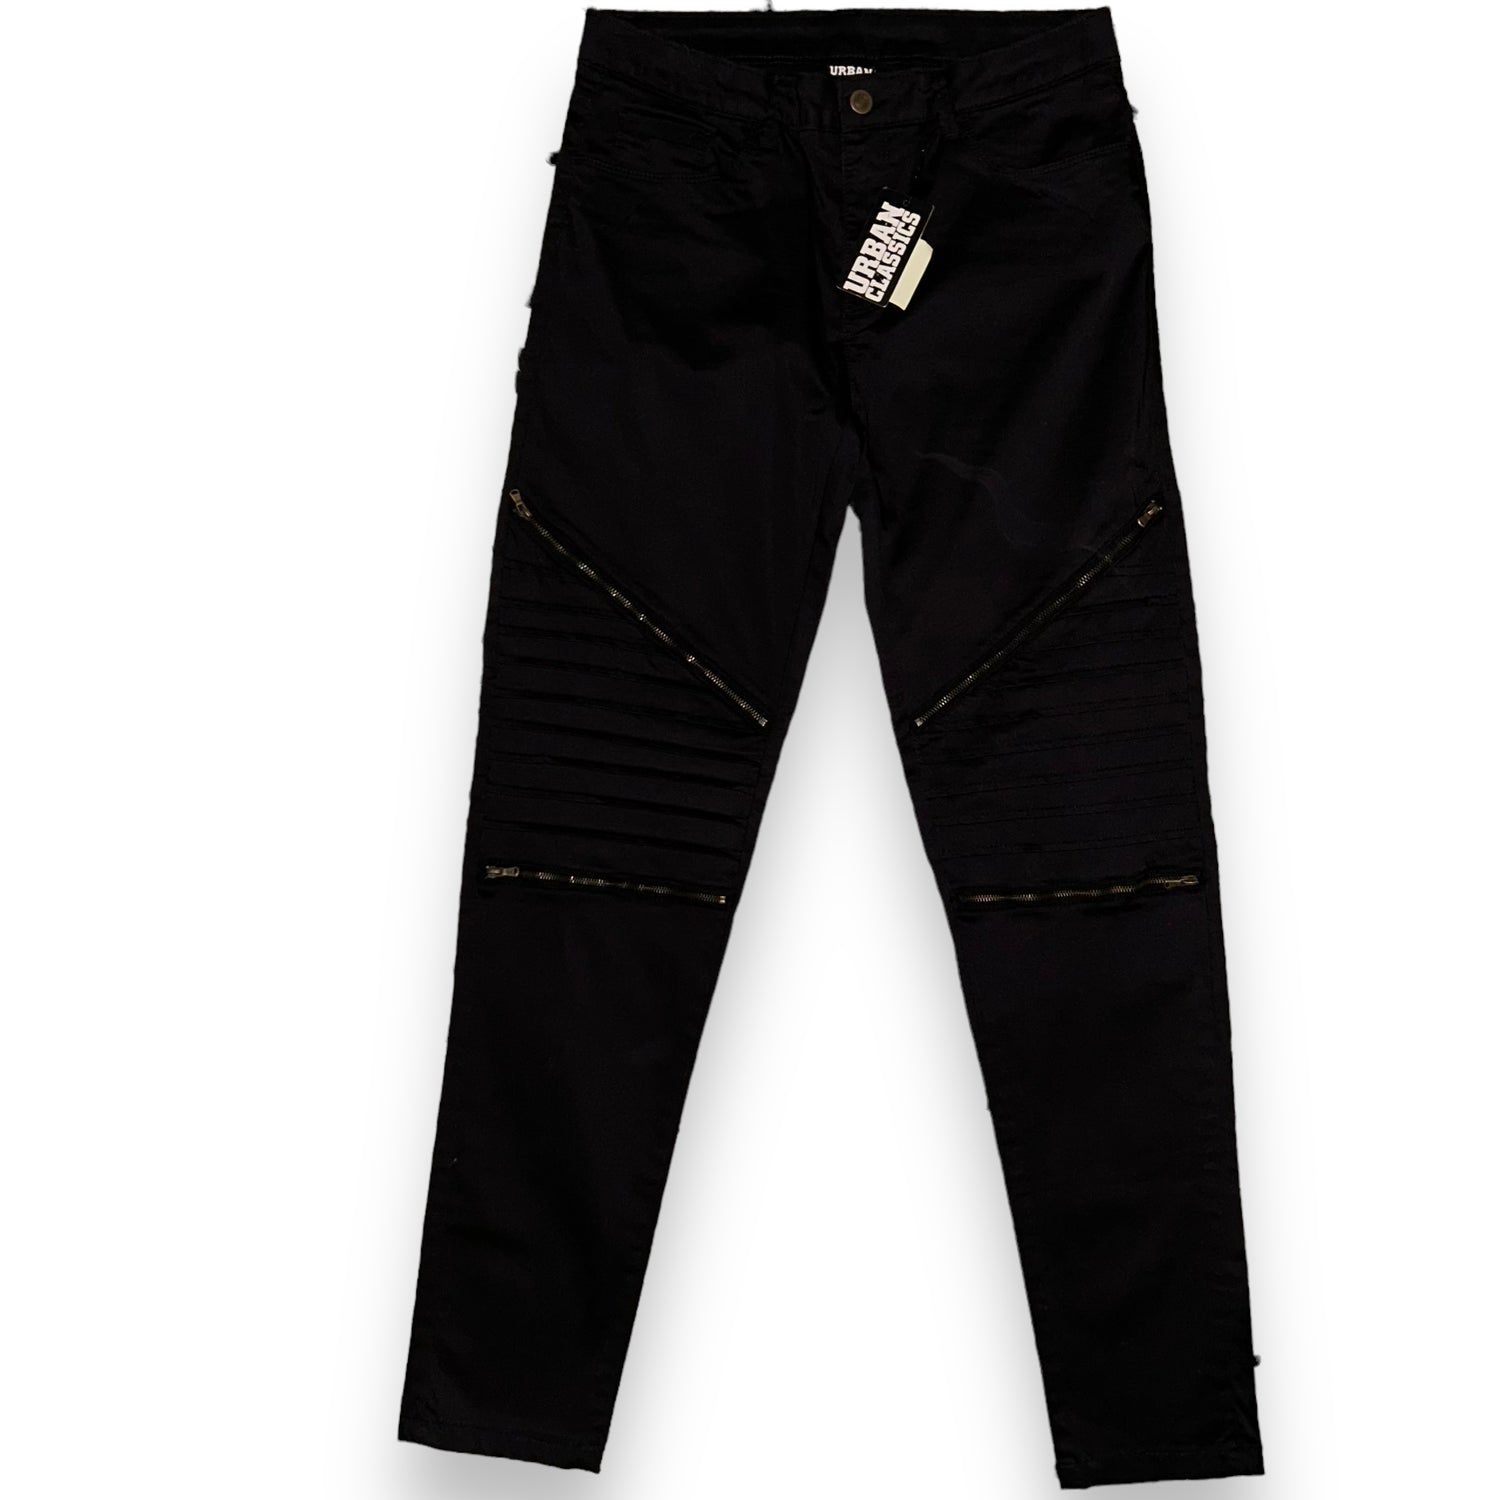 jeans Urban Classic  (30 USA  S)